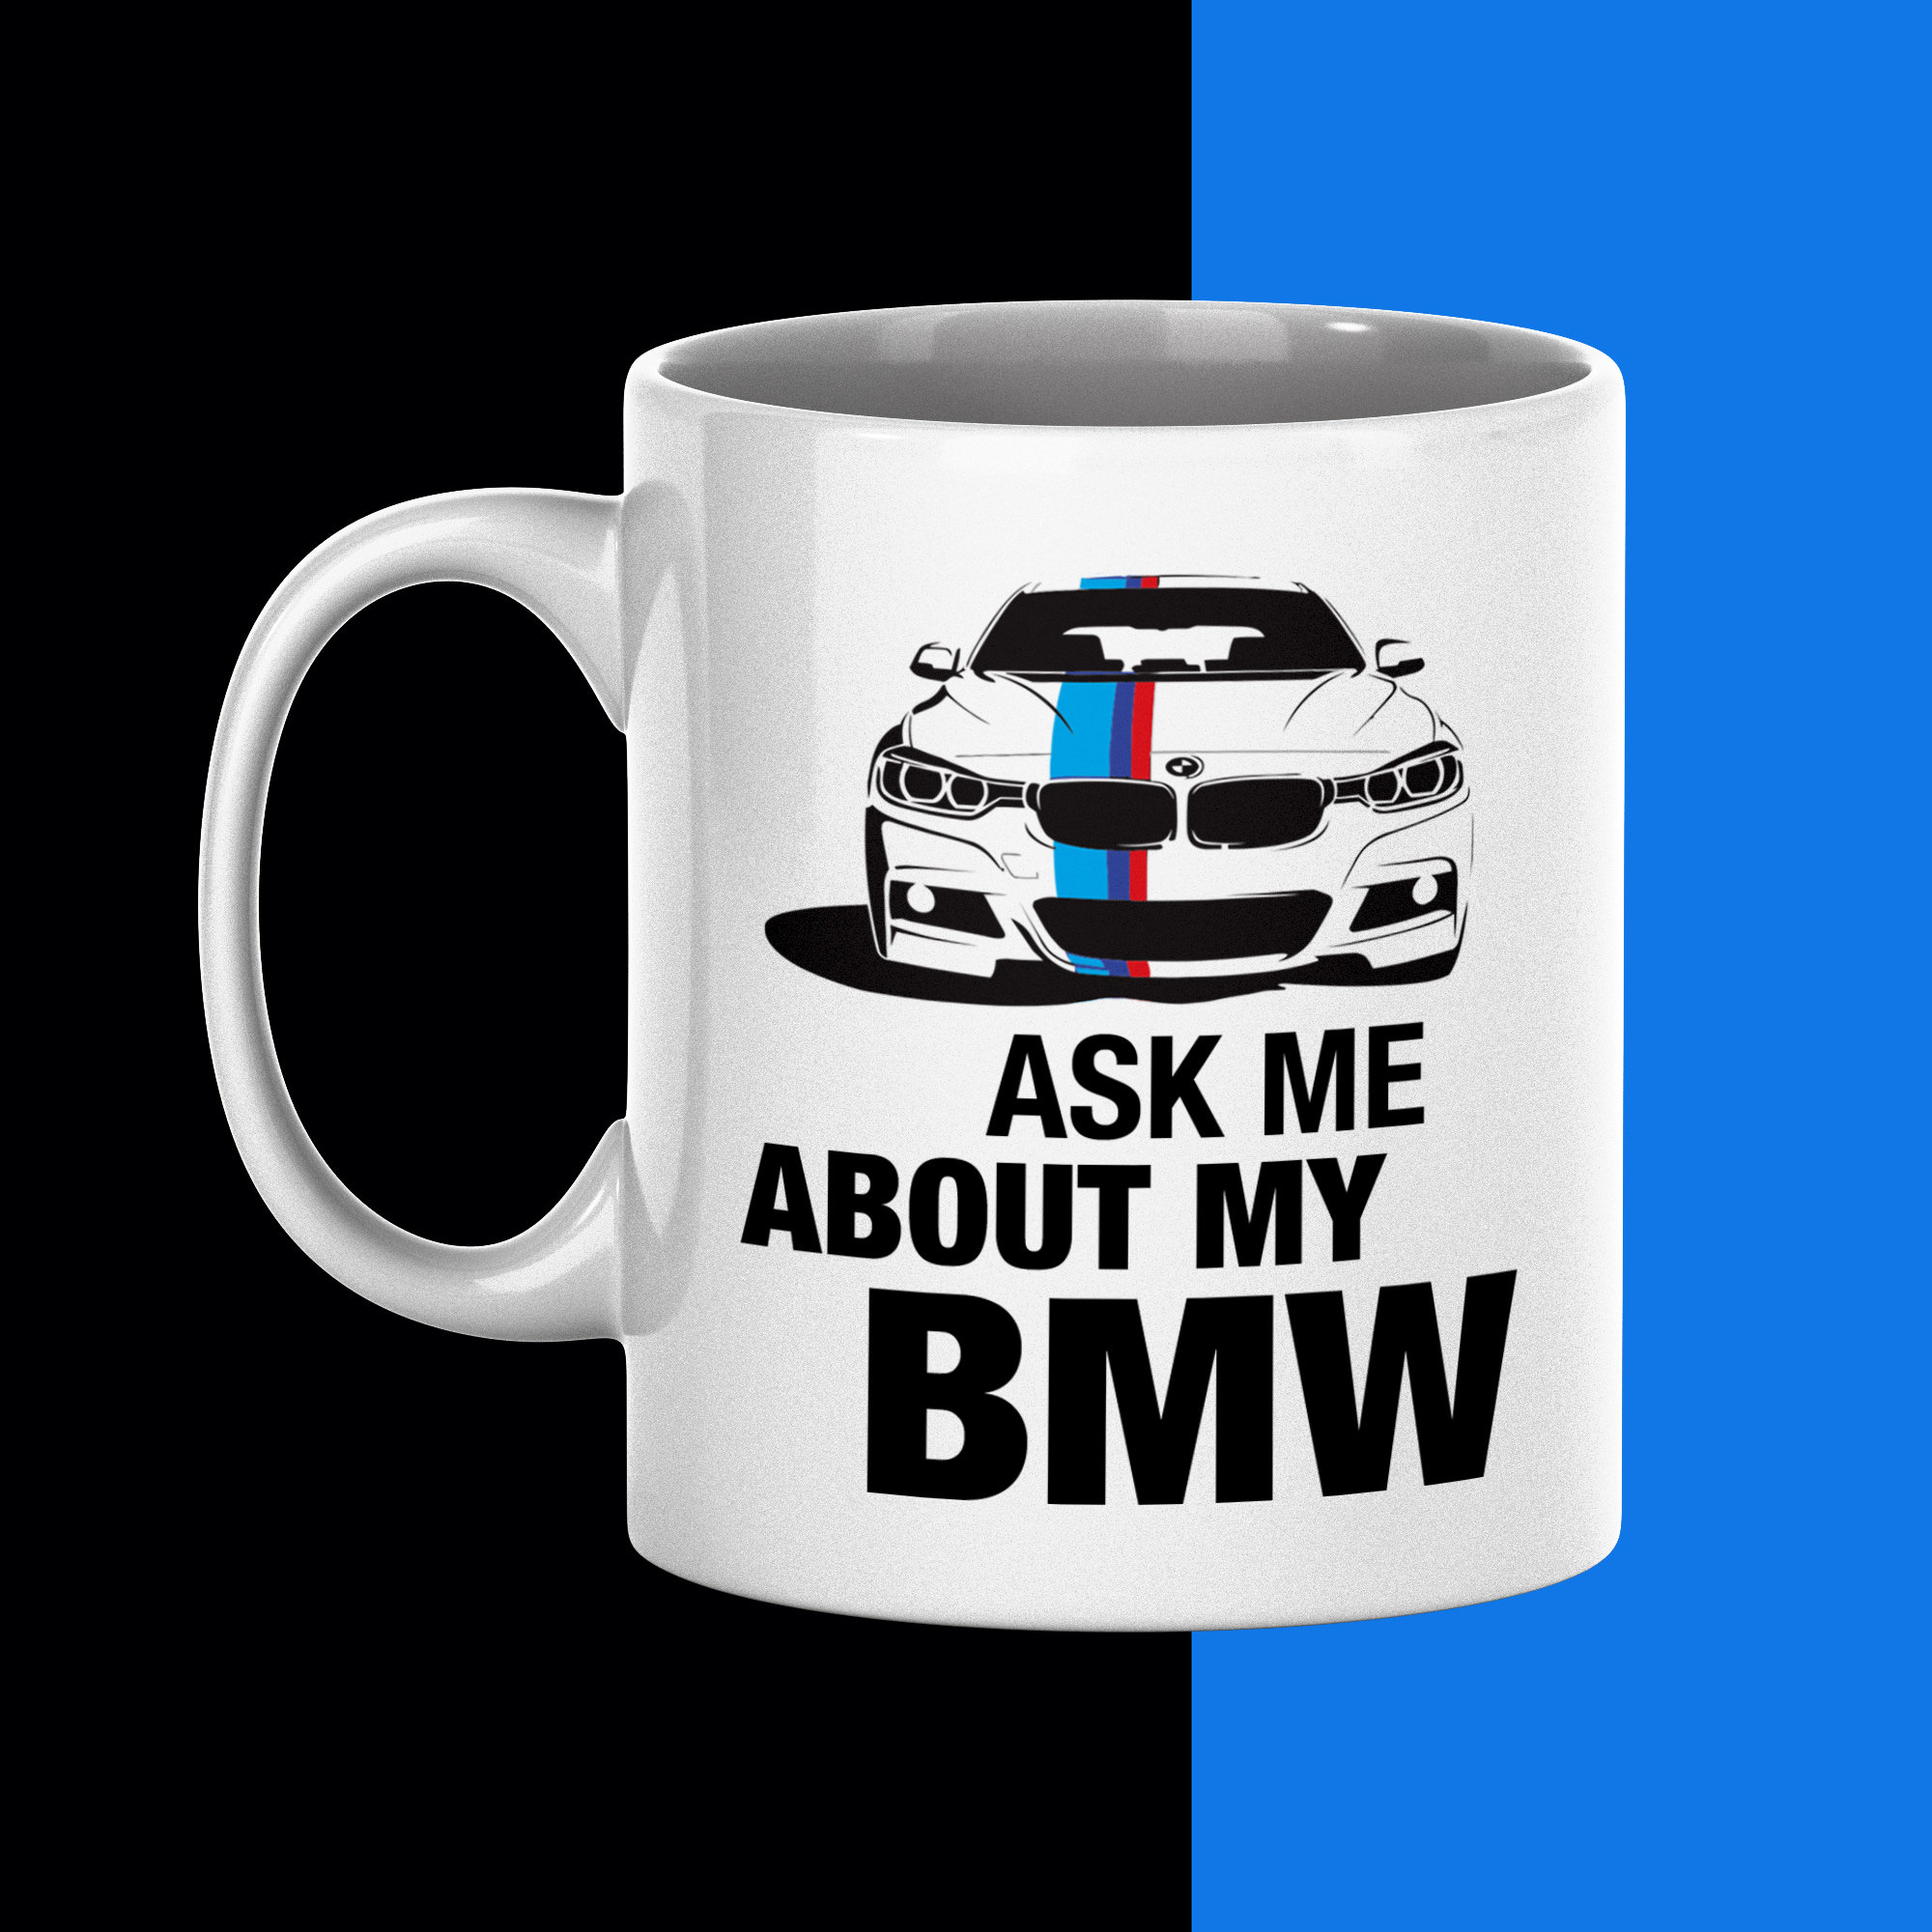 Bmw Coffee Mug, Car Gifts for Men, Car Guy Gifts, Car Gift Ideas